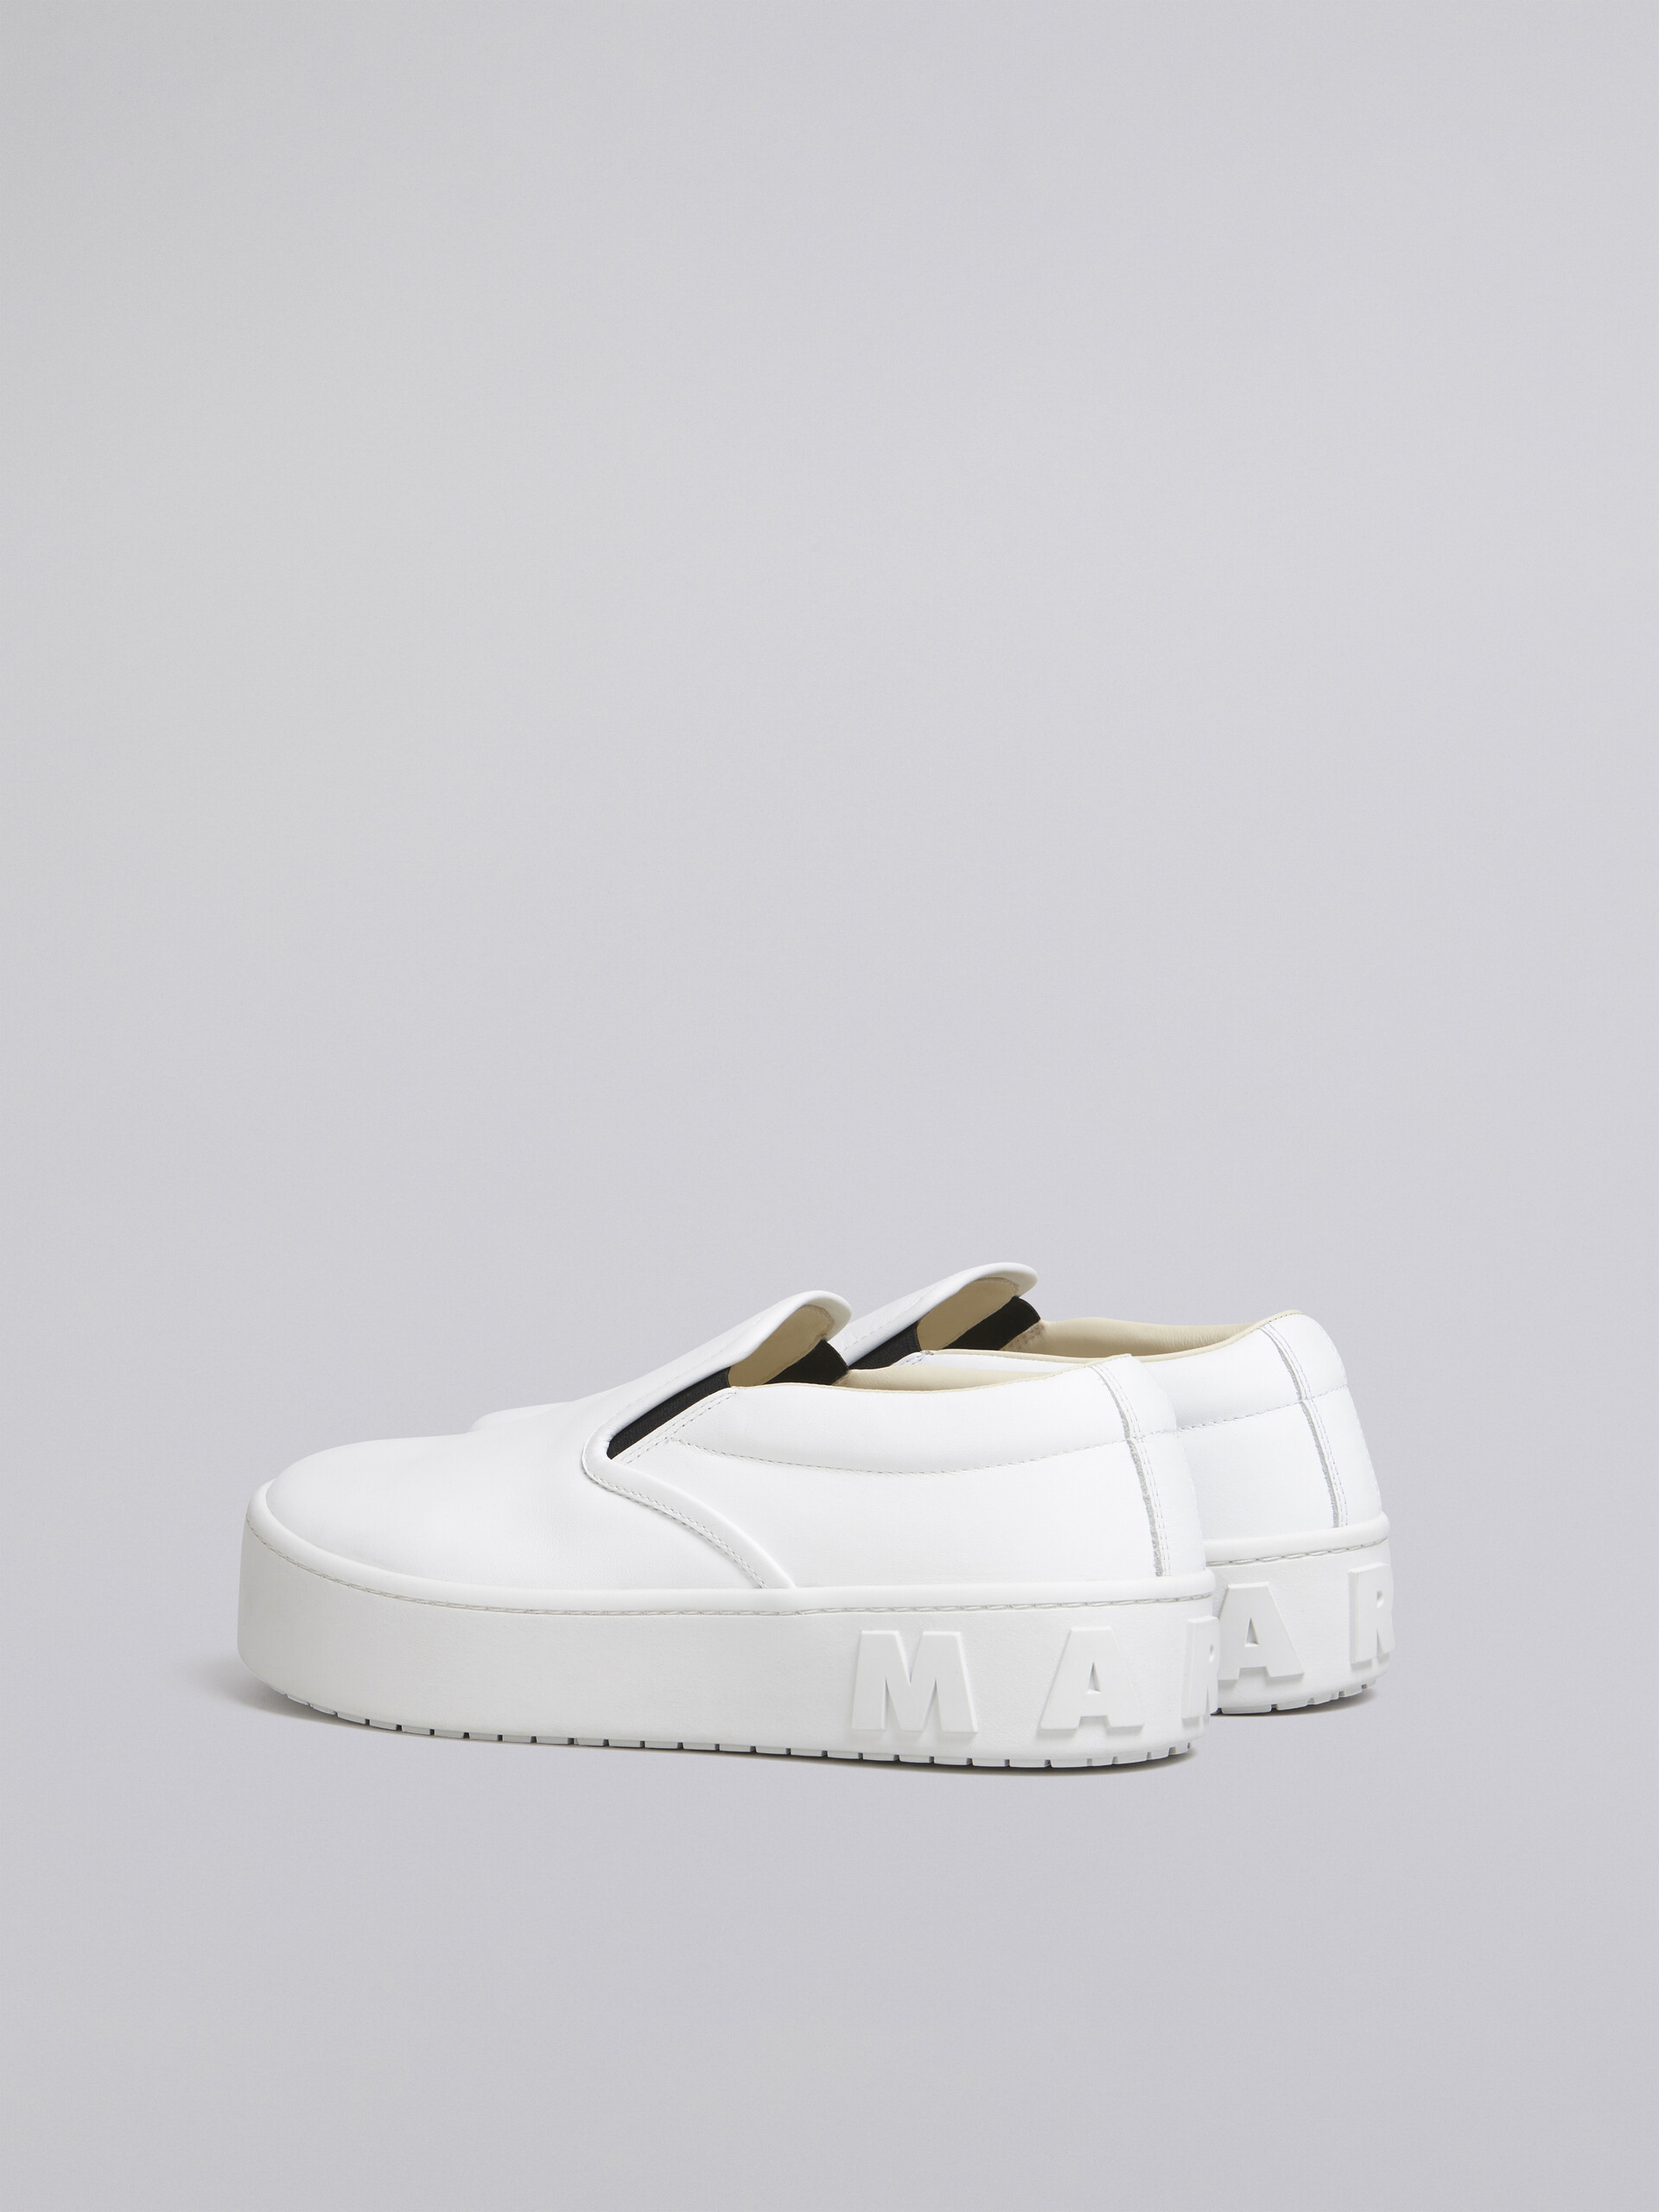 Sneaker slip-on in vitello bianco con maxi logo Marni in rilievo - Sneakers - Image 3